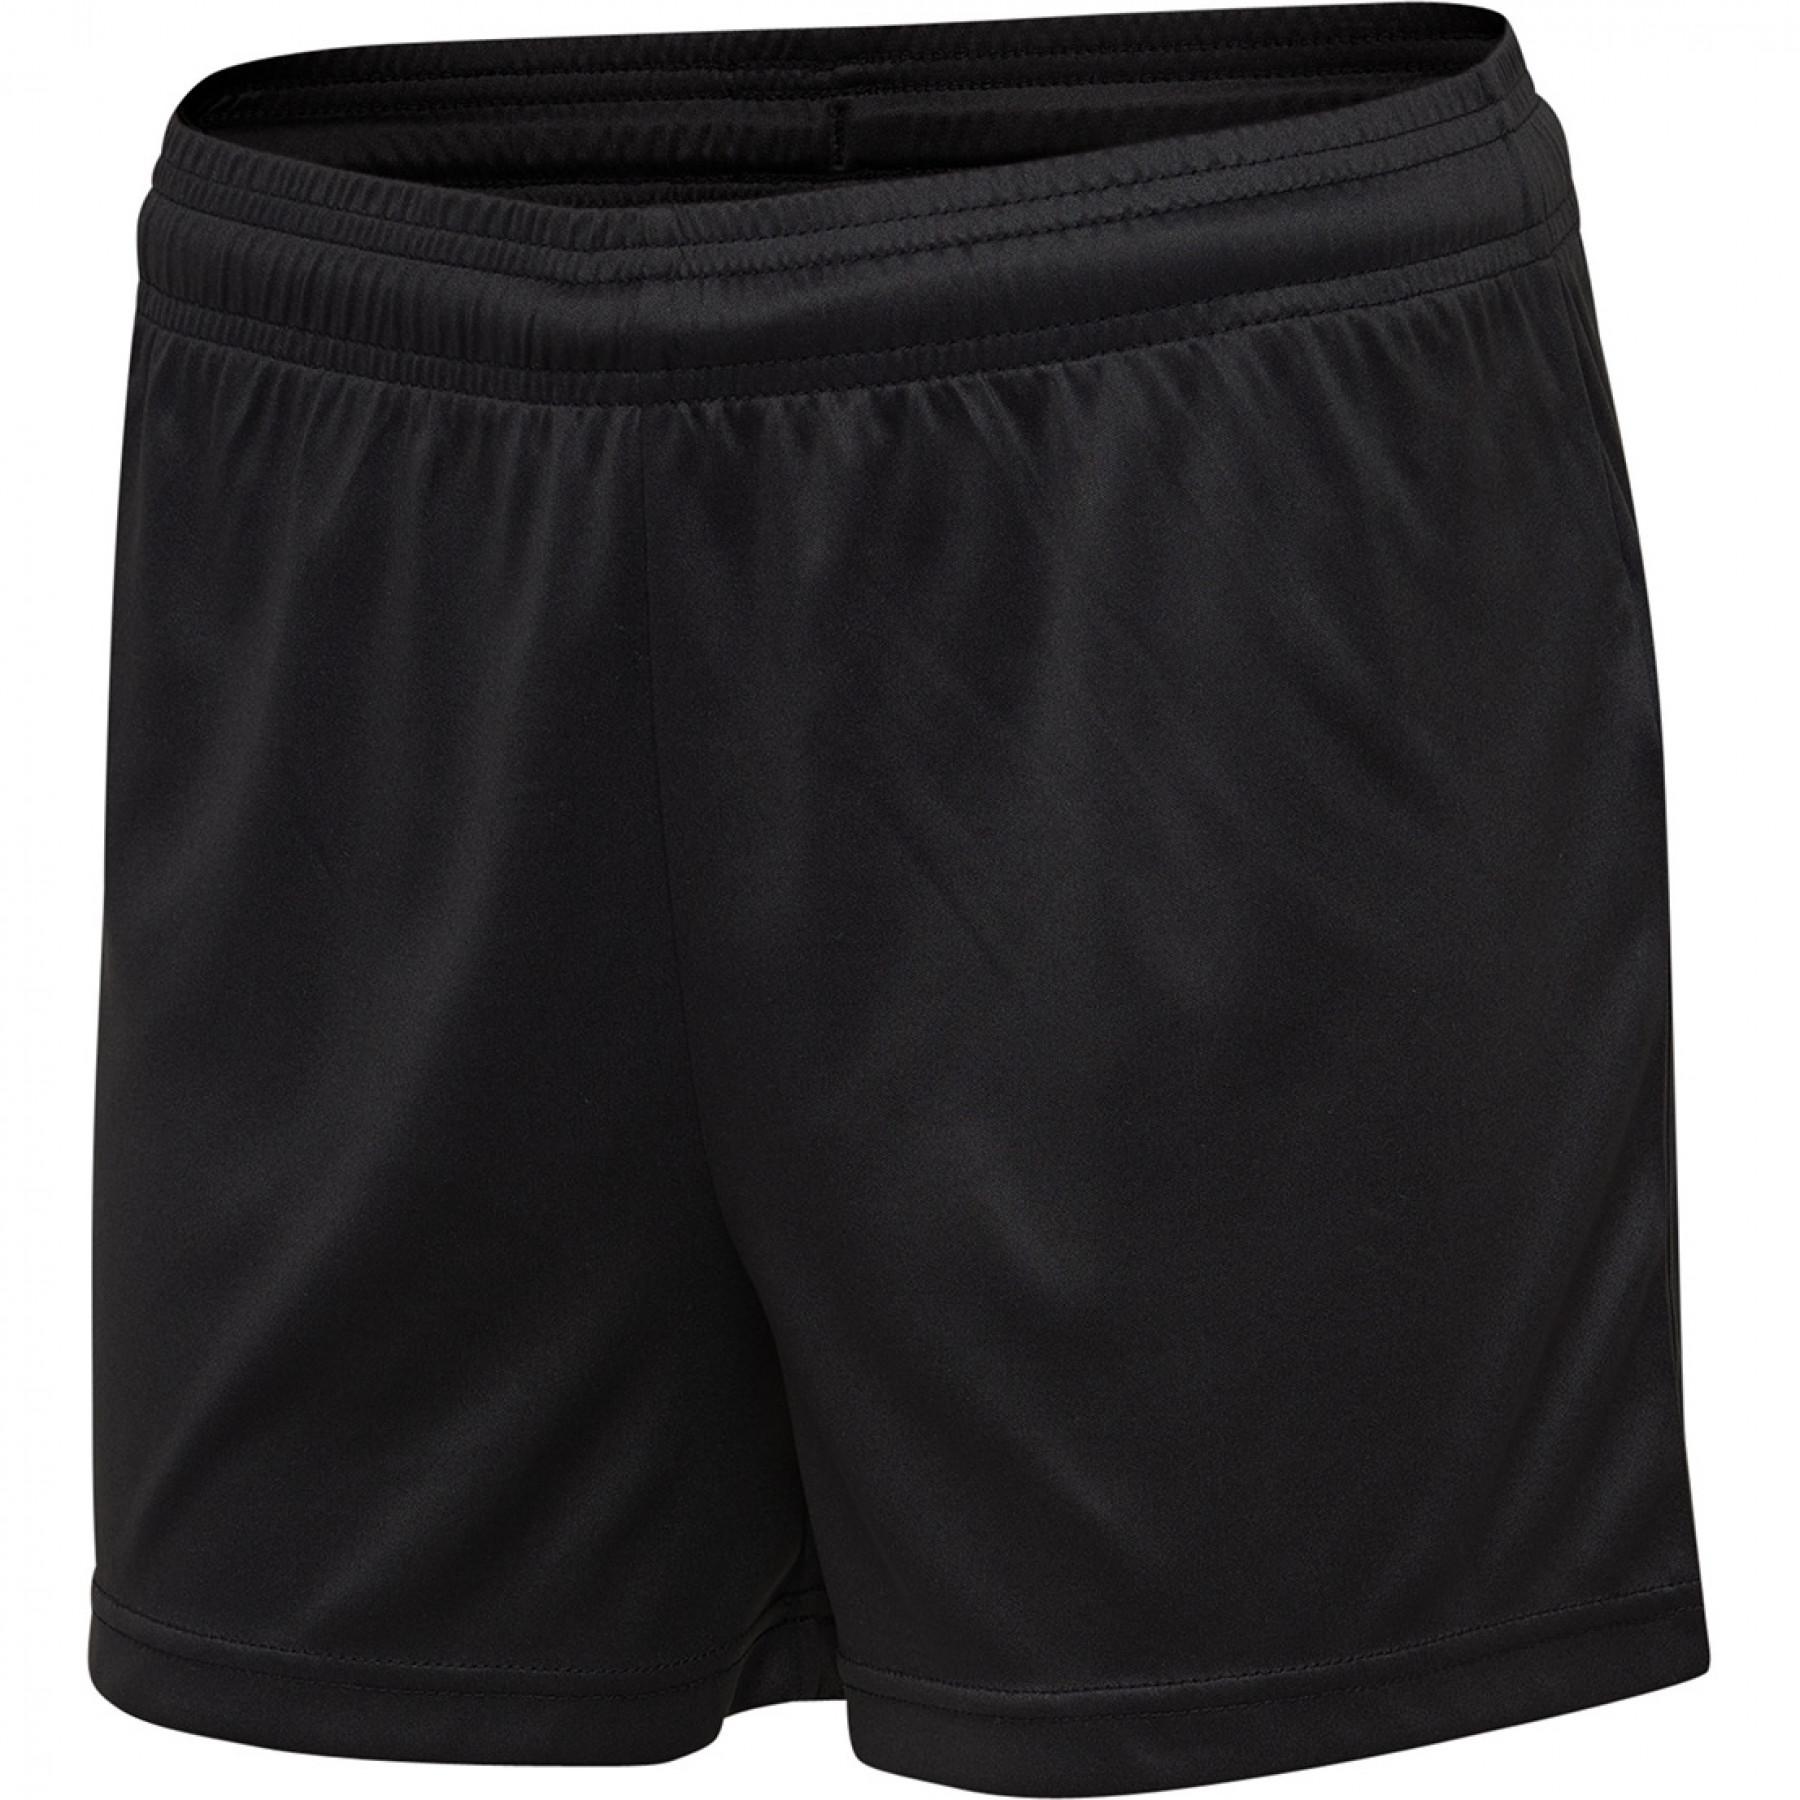 Women's shorts Hummel hmlactive poly